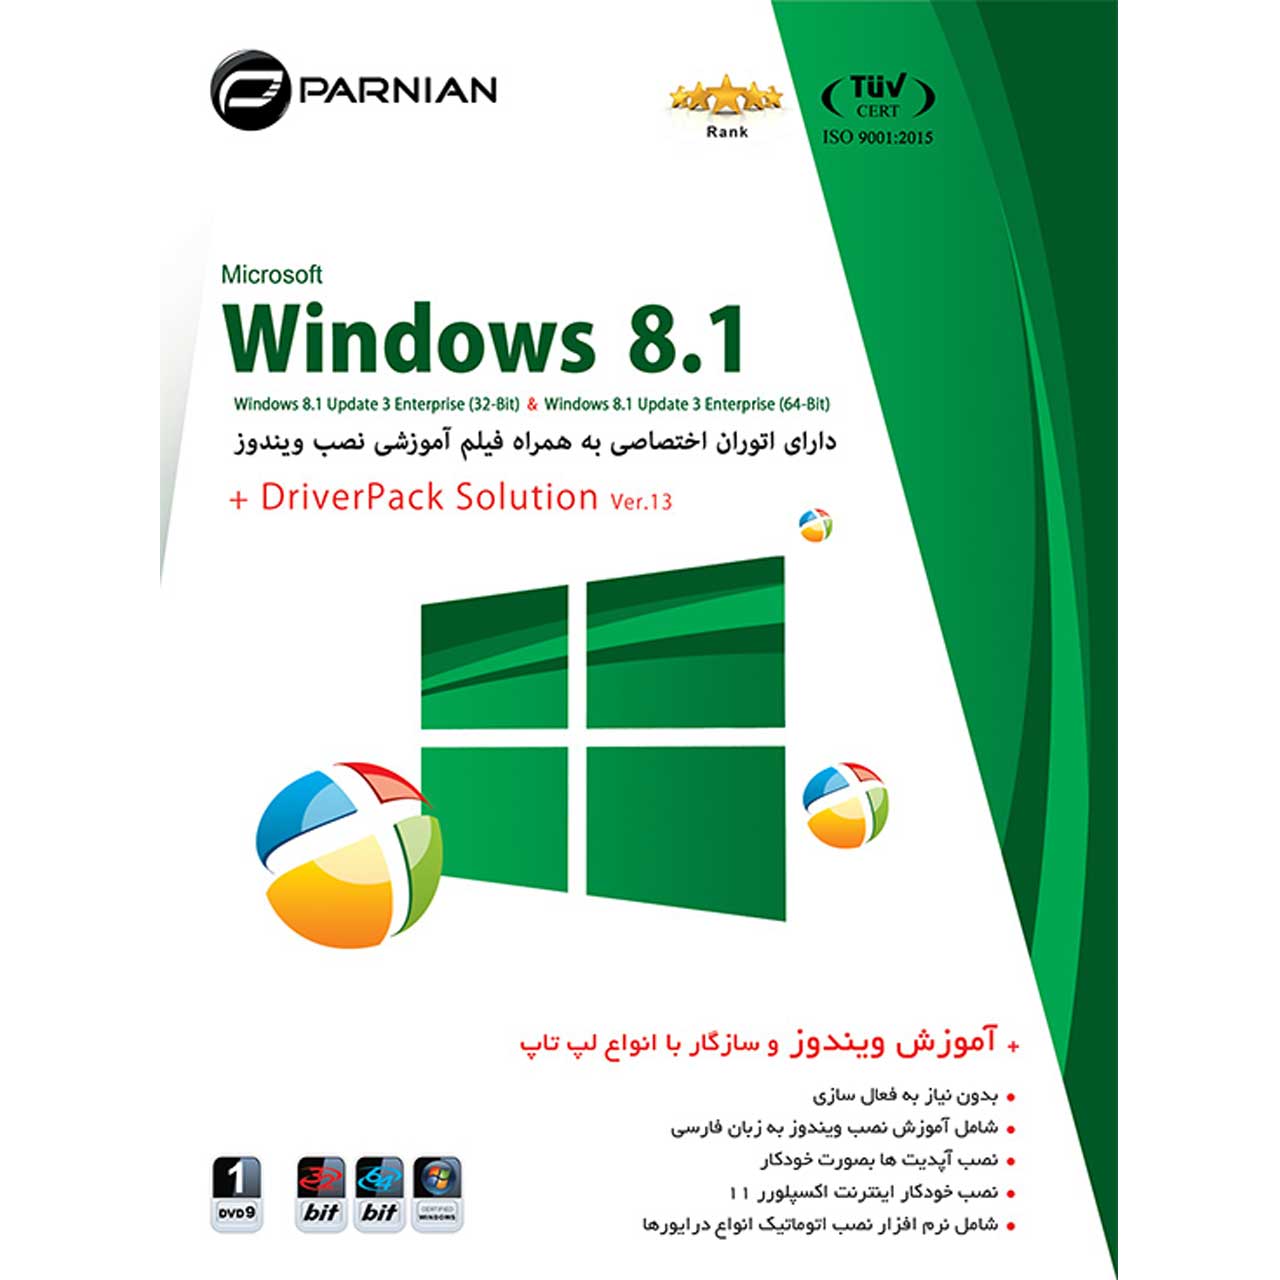 نرم افزار ویندوز 8  به همراه DriverPack Solution Ver.13 نشر پرنیان